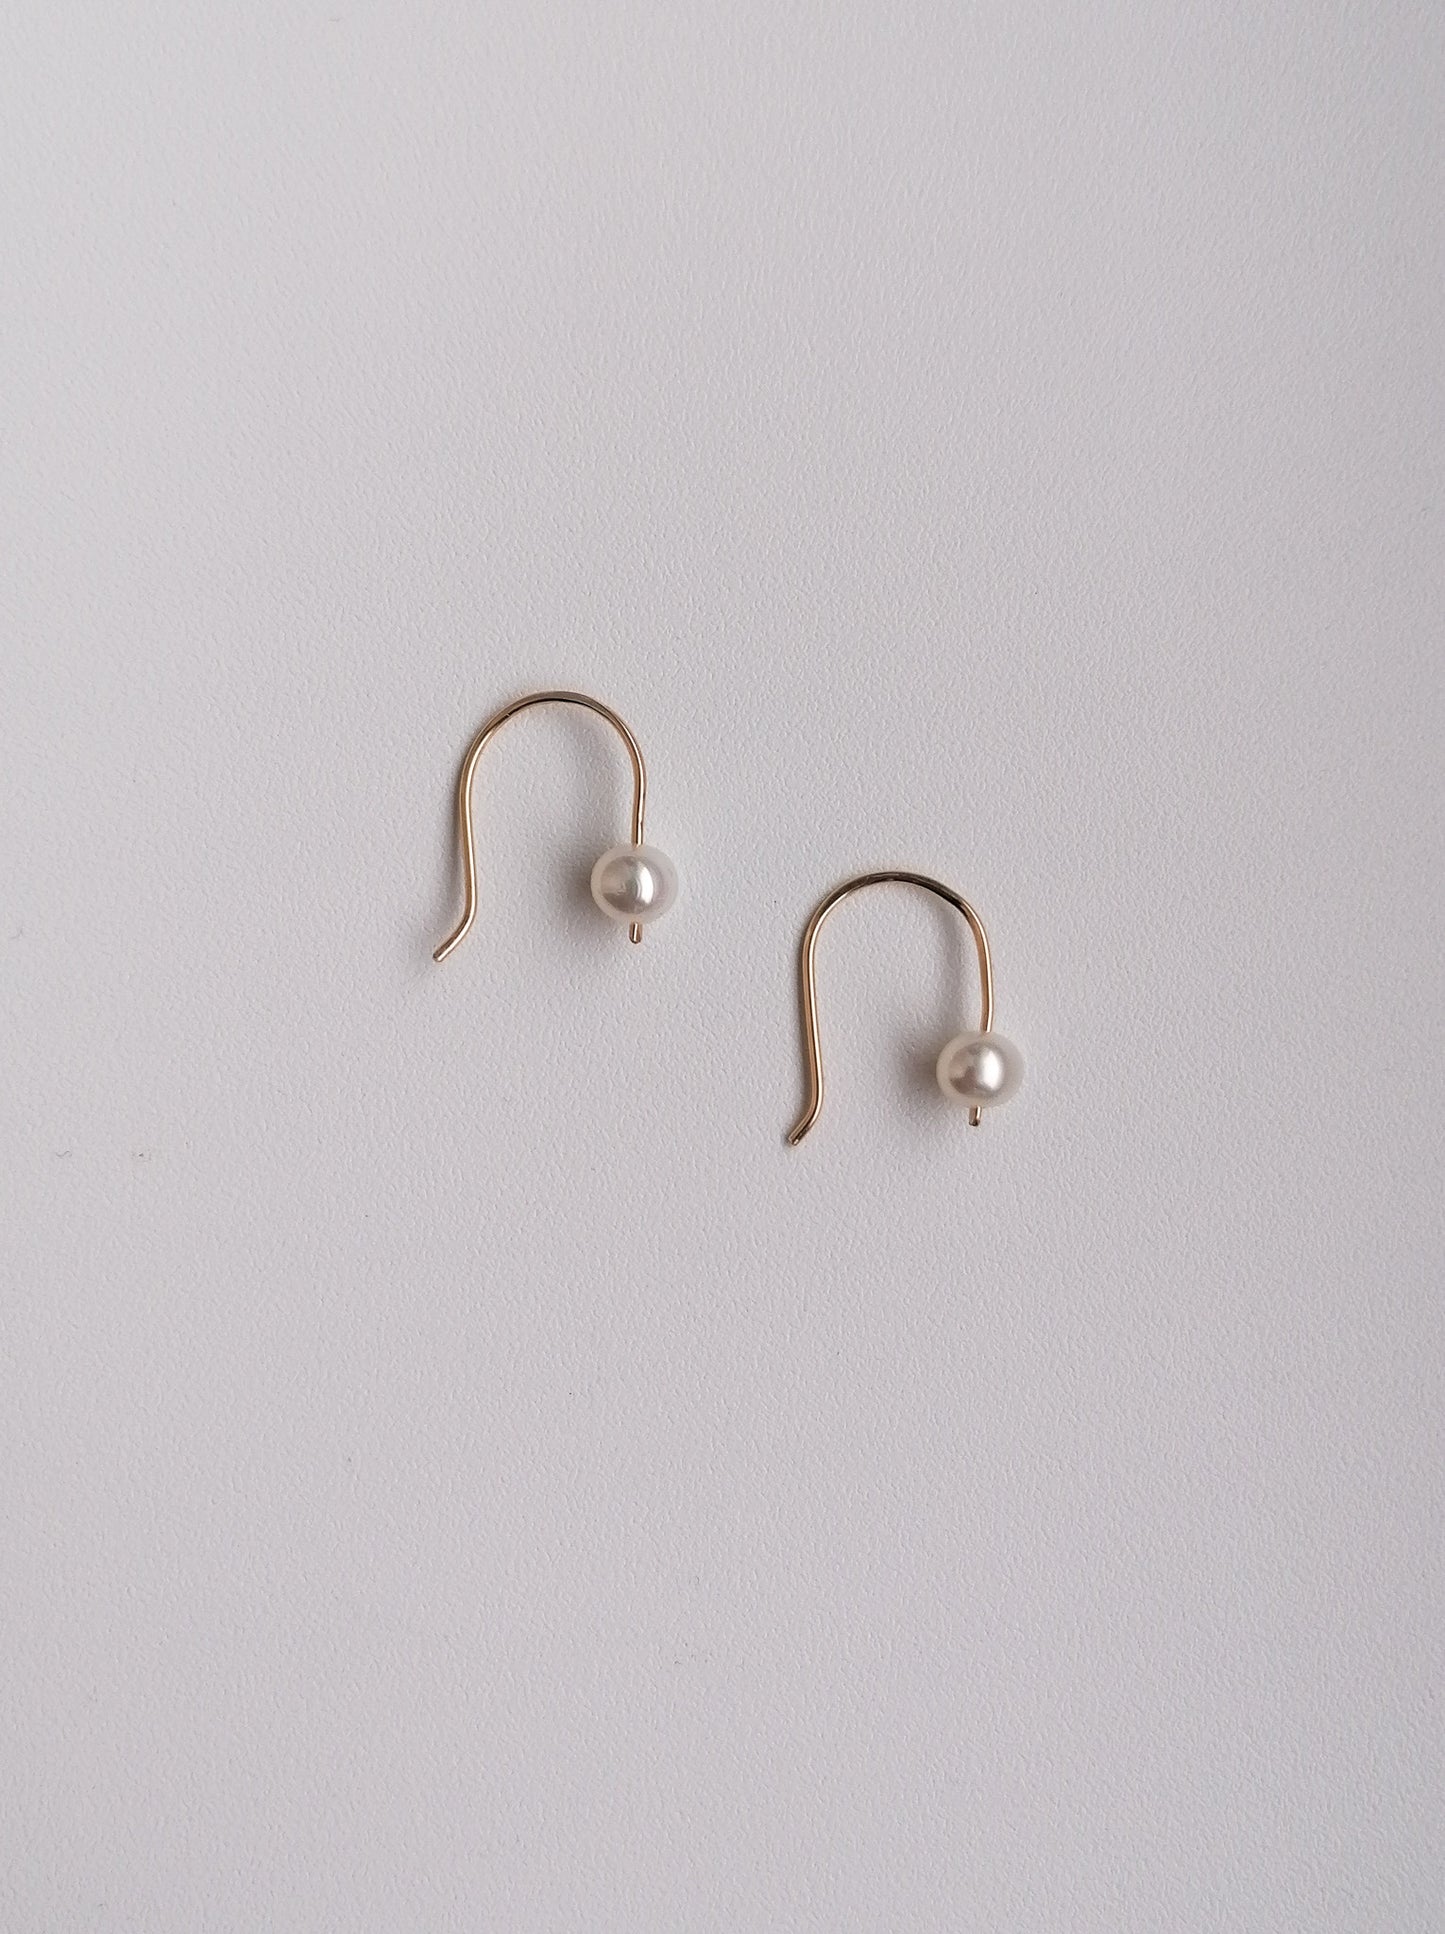 Seina earrings - gold filled